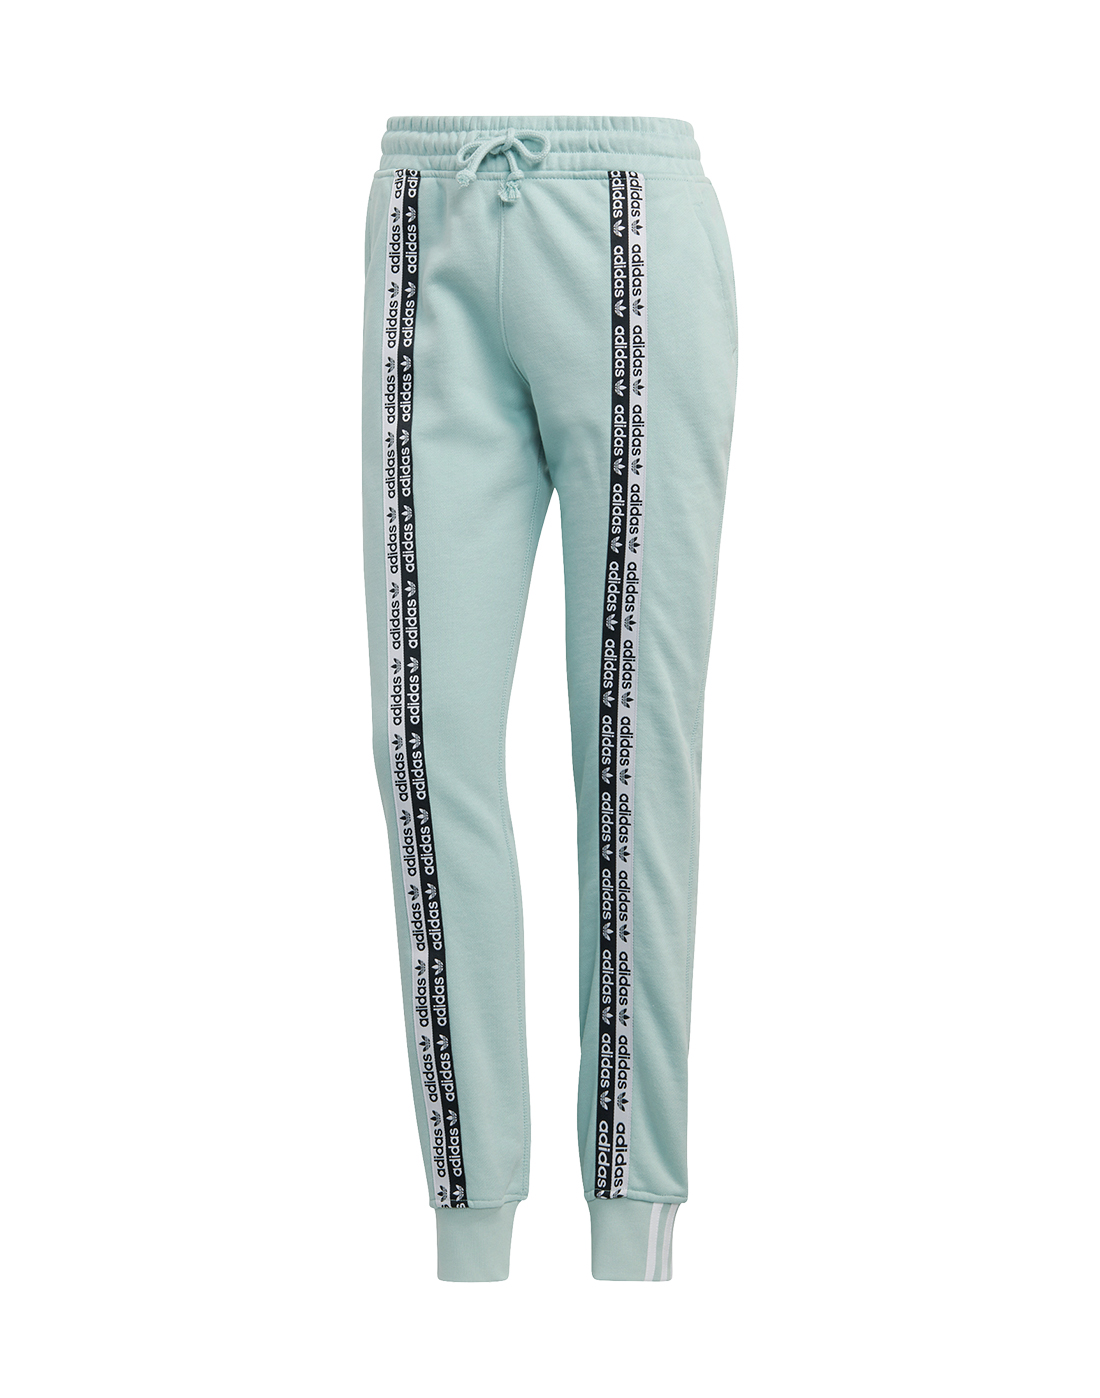 Women s Adidas Originals Cuffed Pants GU0803 x3 Option 2 14 95